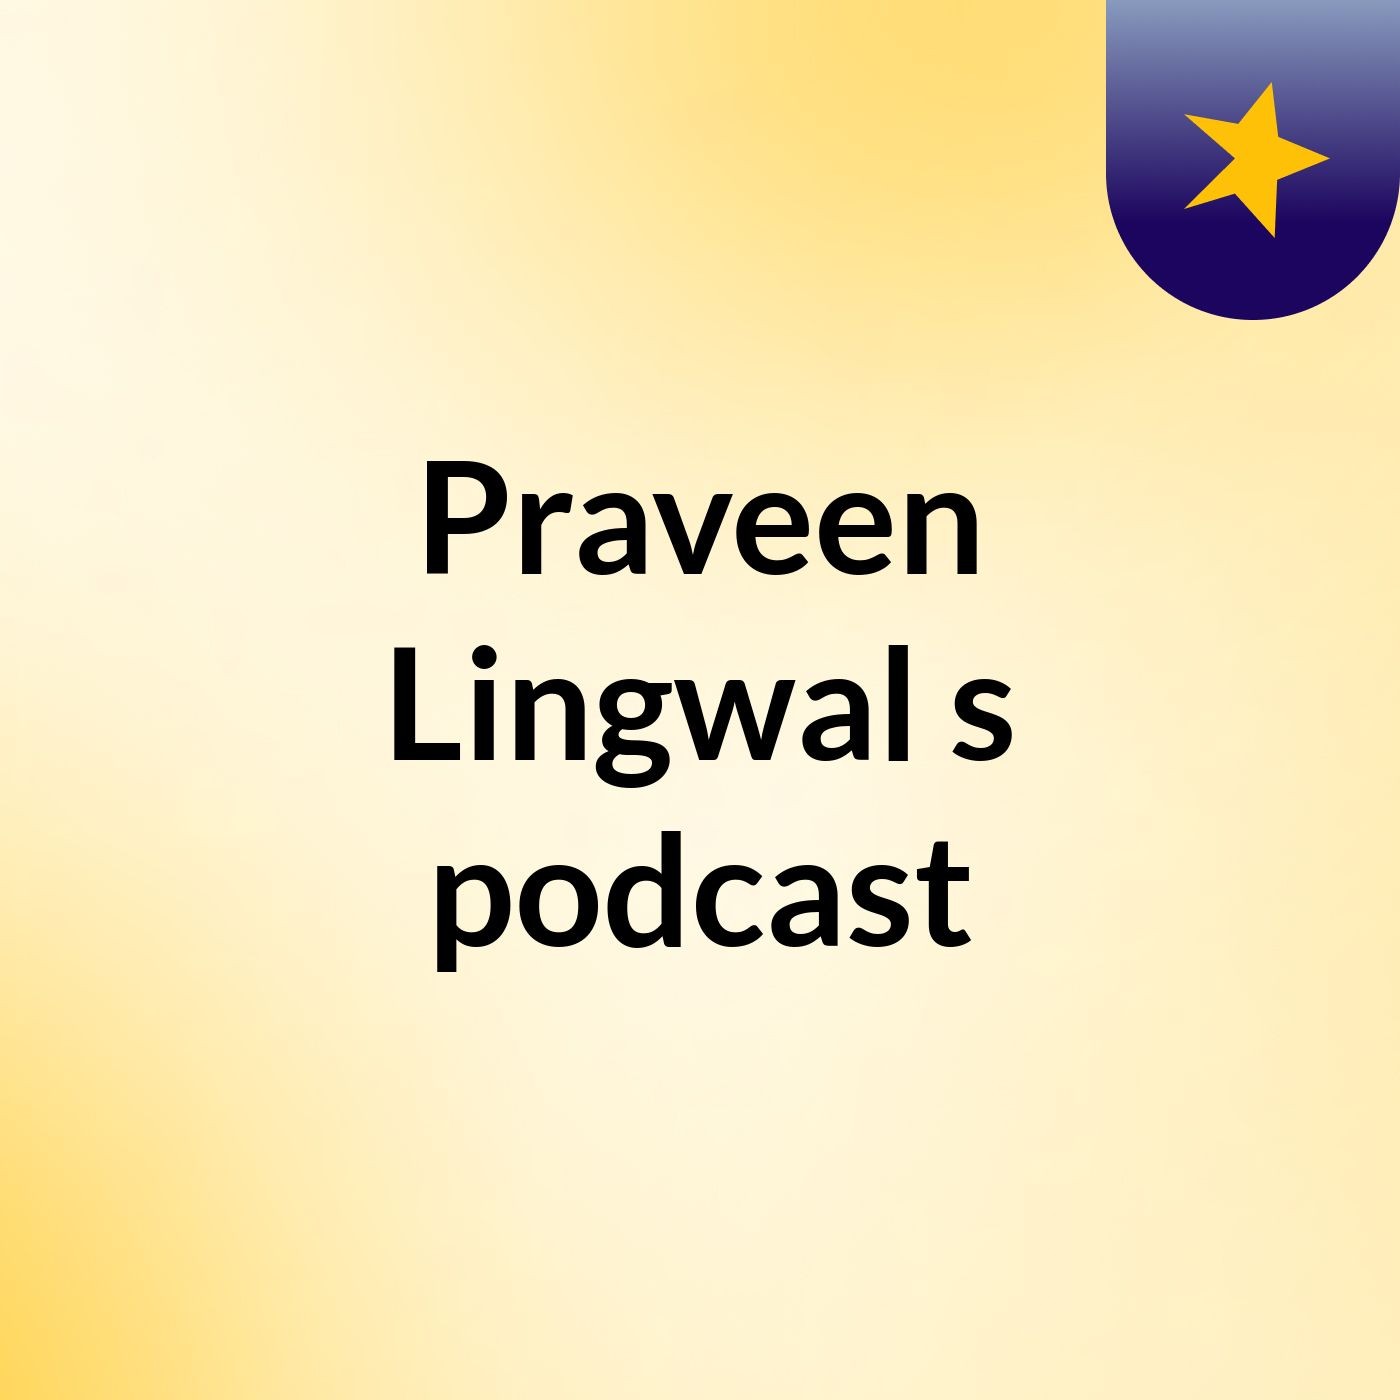 Episode 2- Praveen Lingwal's podcast